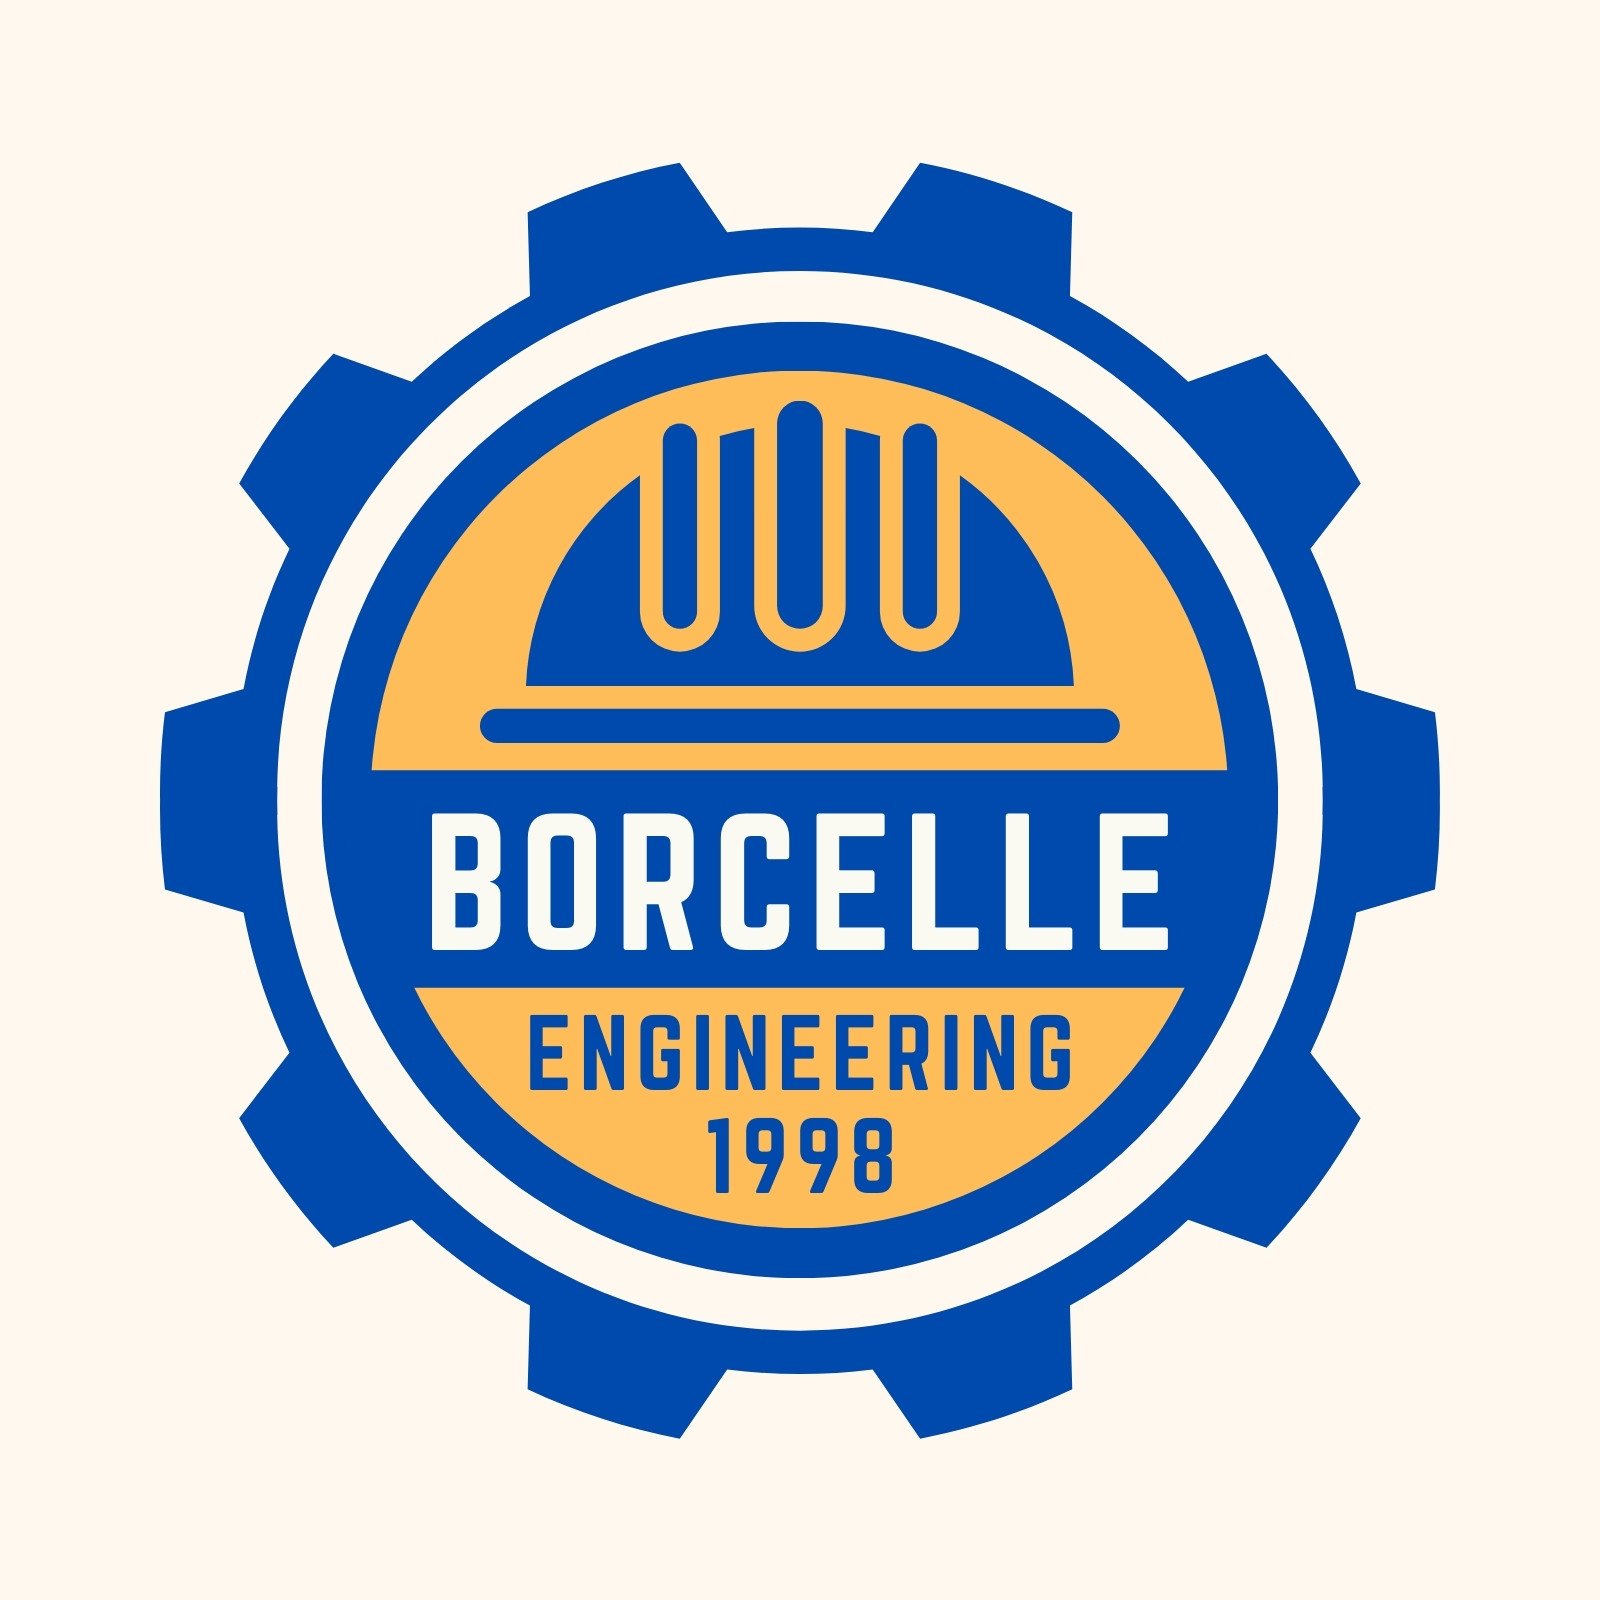 civil engineering construction logo